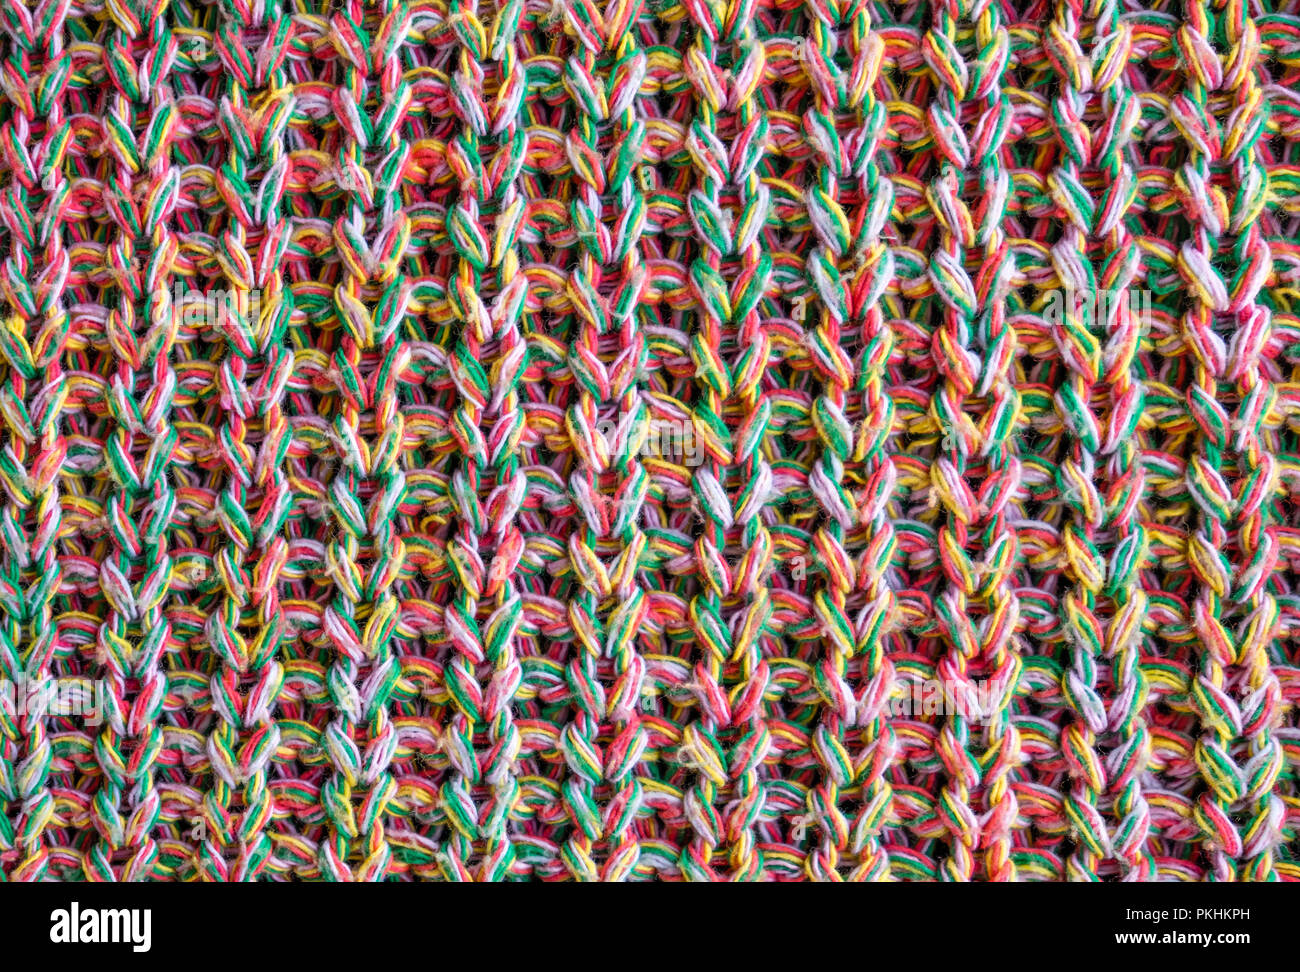 Closeup of a knitting pattern using multi coloured wool Stock Photo